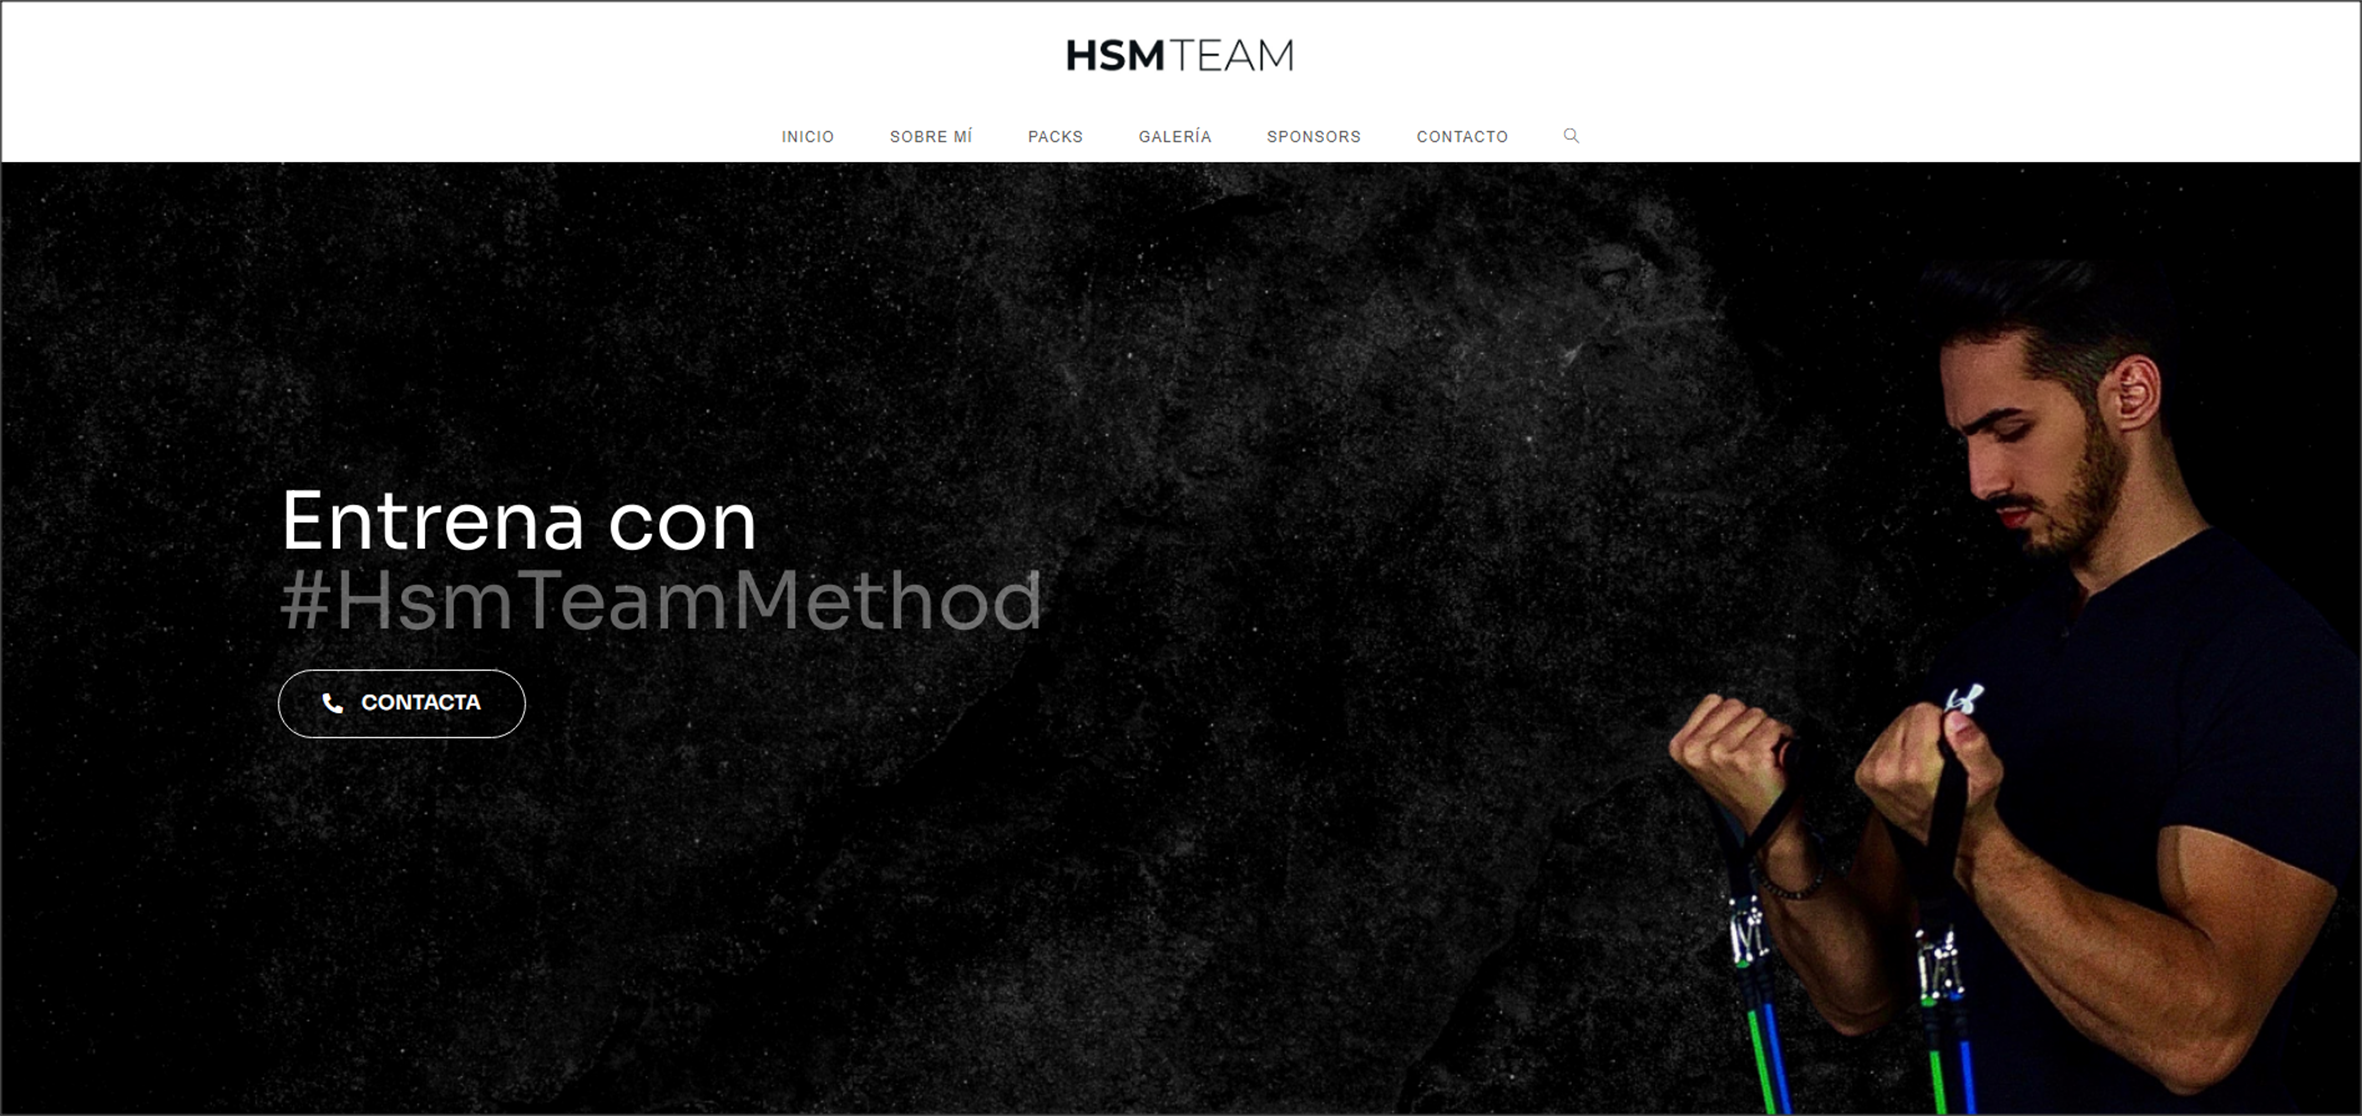 hsm team madrid personal trainer héctor web